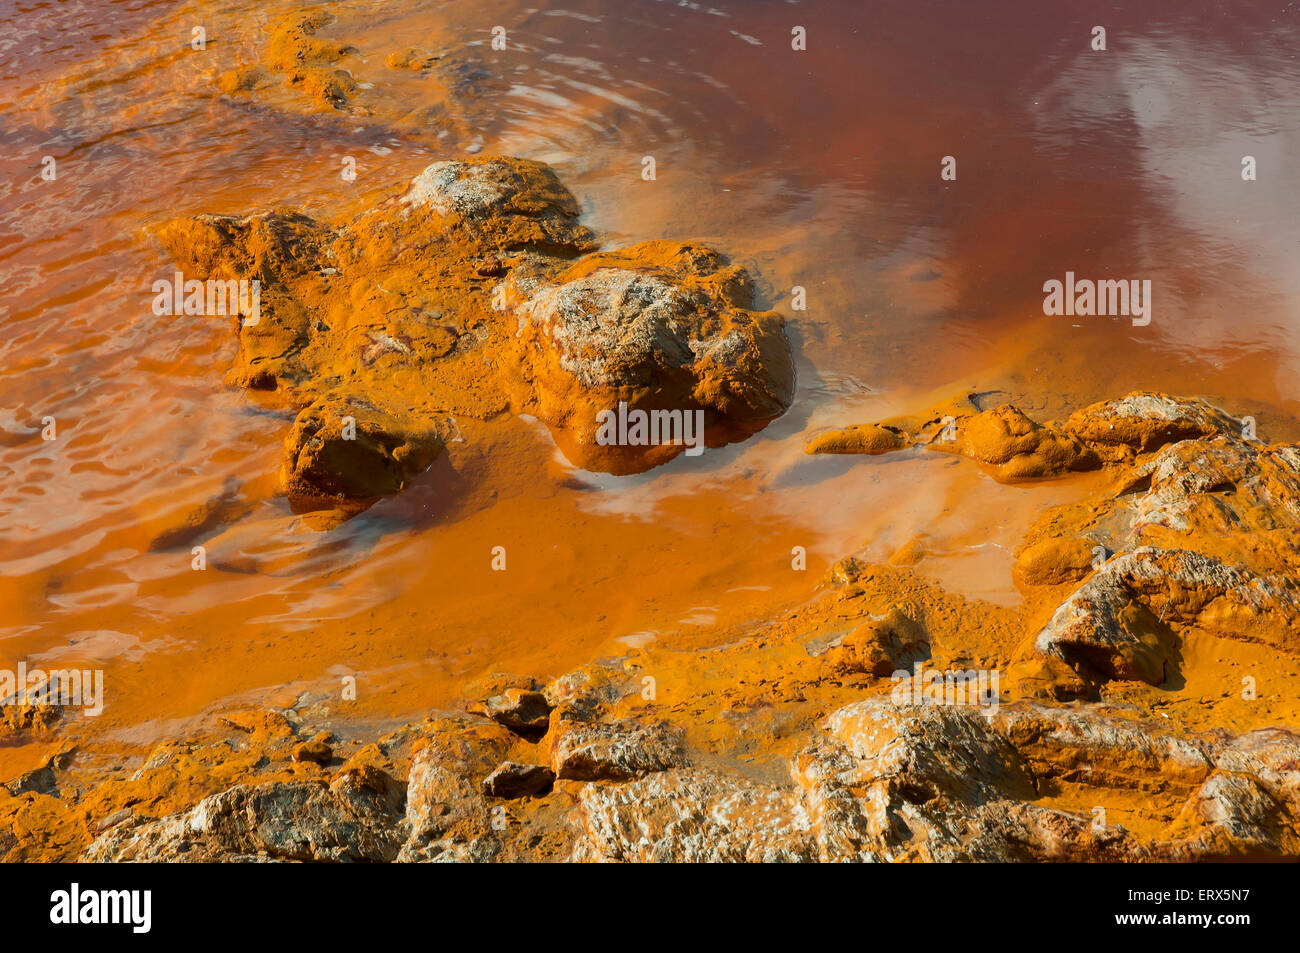 Rio Tinto pollution, Villarrasa, Huelva province, Region of Andalusia, Spain, Europe Stock Photo